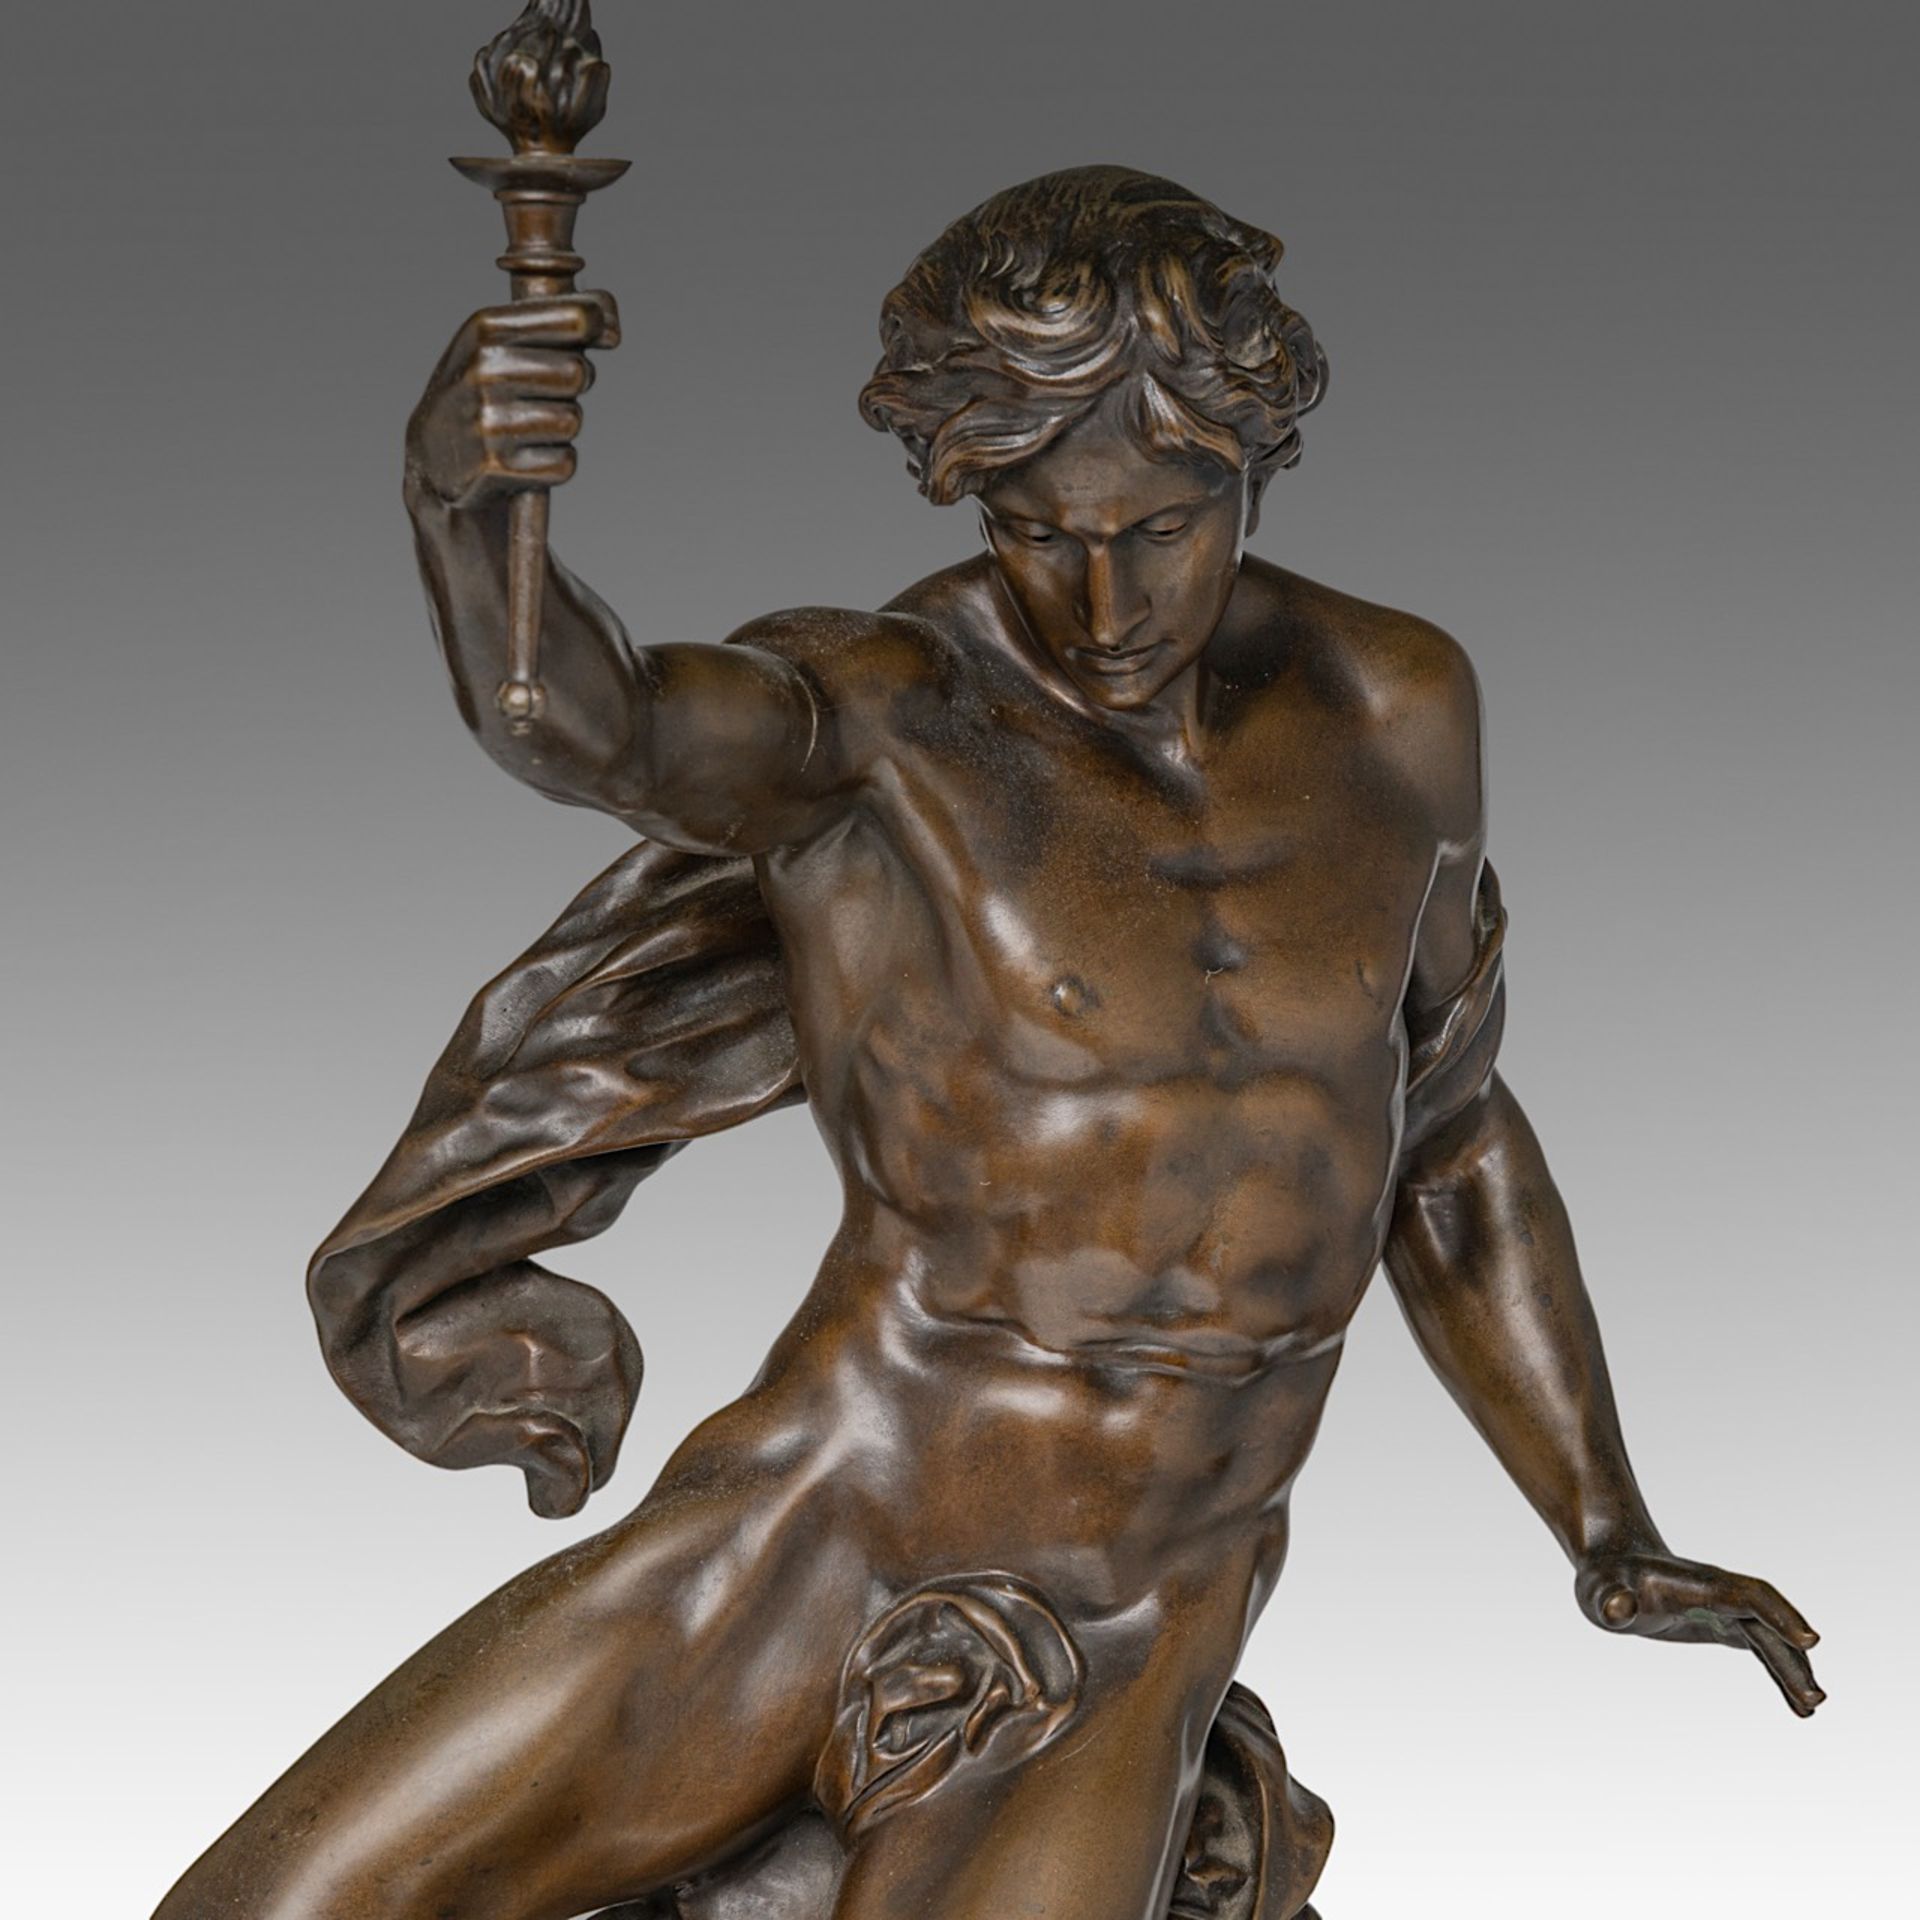 Emile Louis Picault (1833-1915), 'Excelsior', patinated bronze, H 61 cm - Image 7 of 8